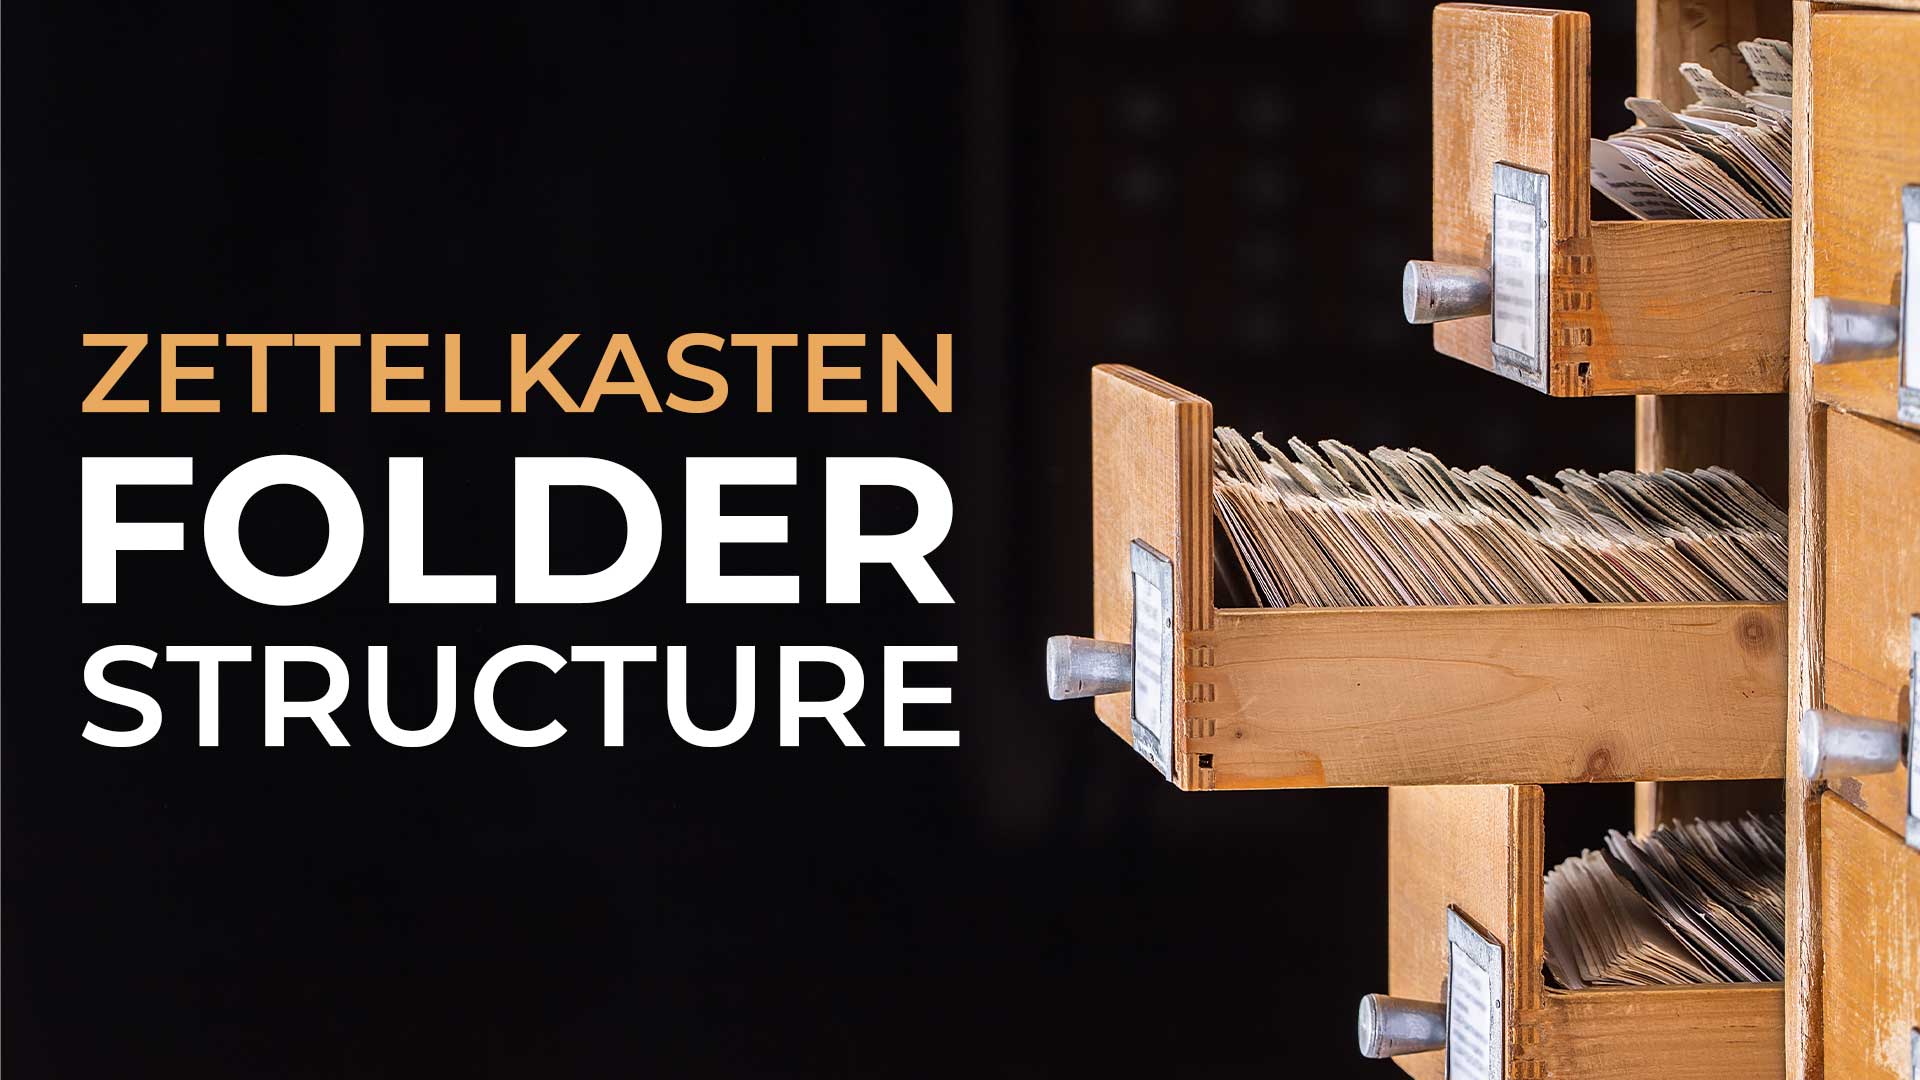 What Folder Structure Should You Use in Your Zettelkasten?